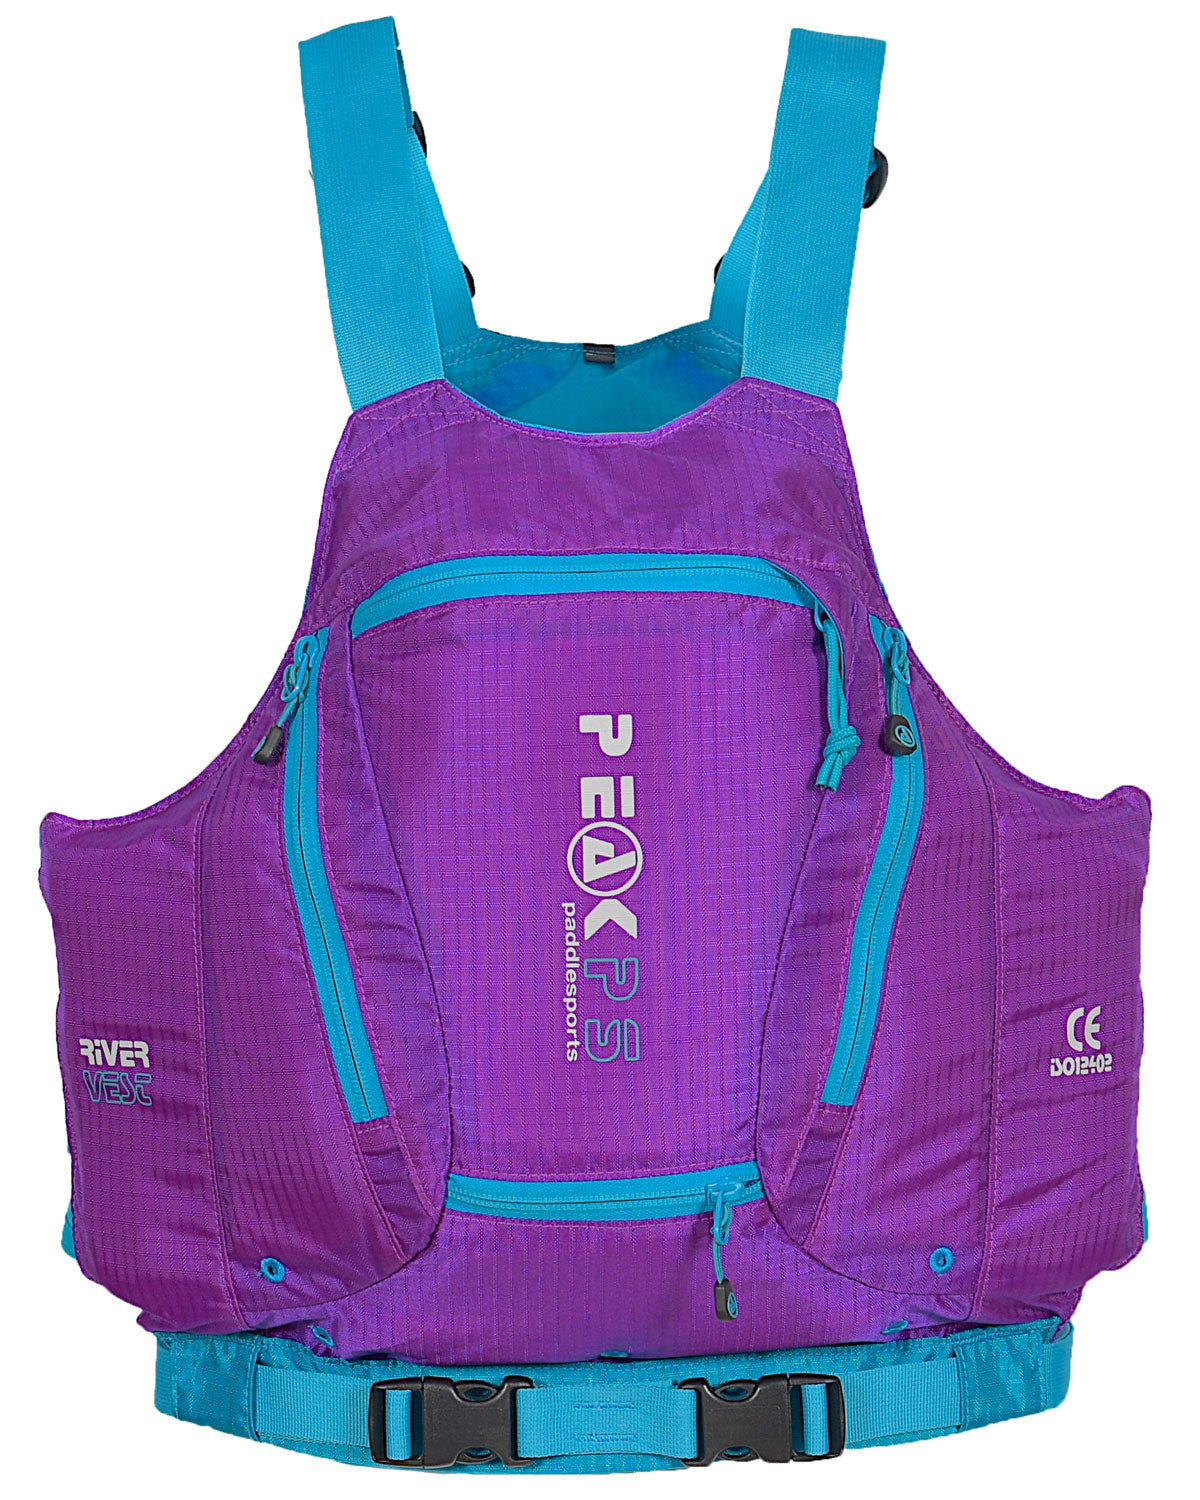 The purple version of the Peak Paddlesports' River vest